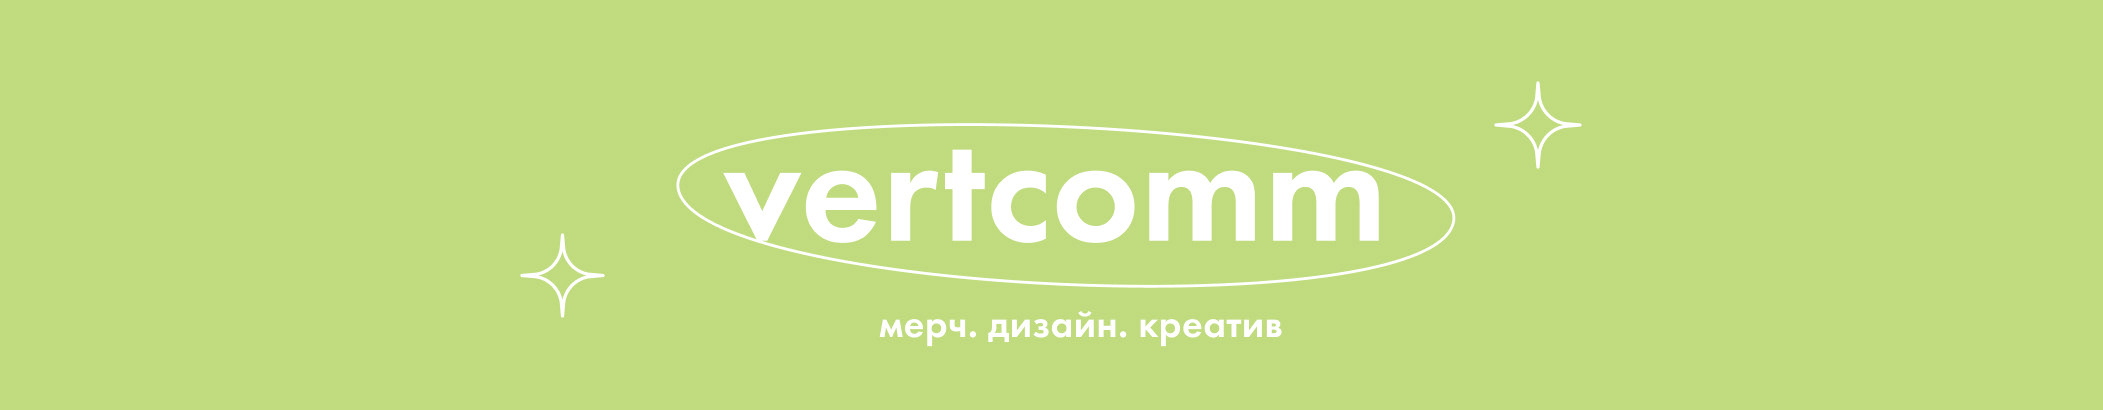 vertcomm cases's profile banner